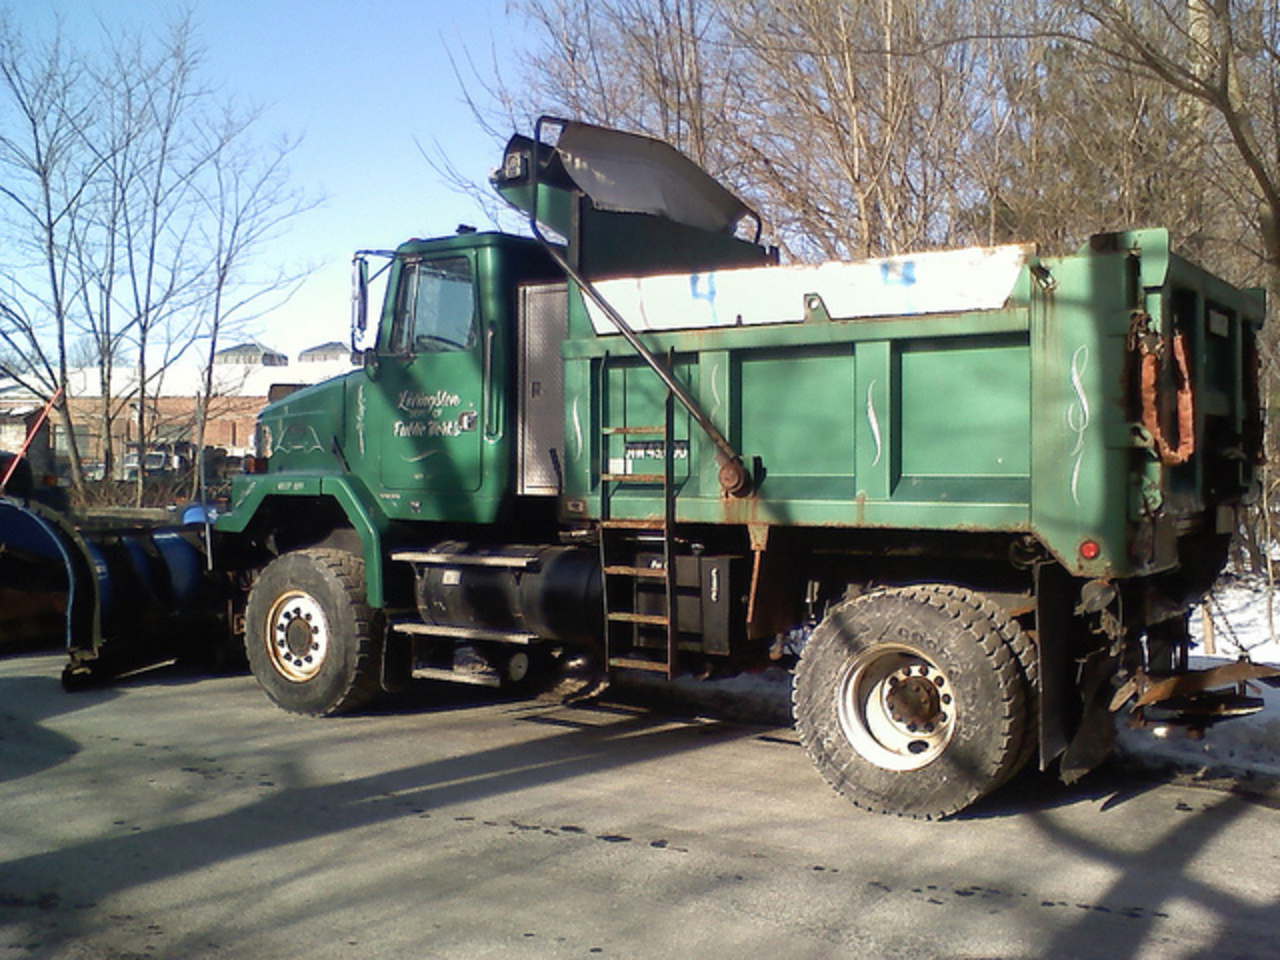 4x4 Volvo ACL64 Municipal Dump Truck | Flickr - Photo Sharing!